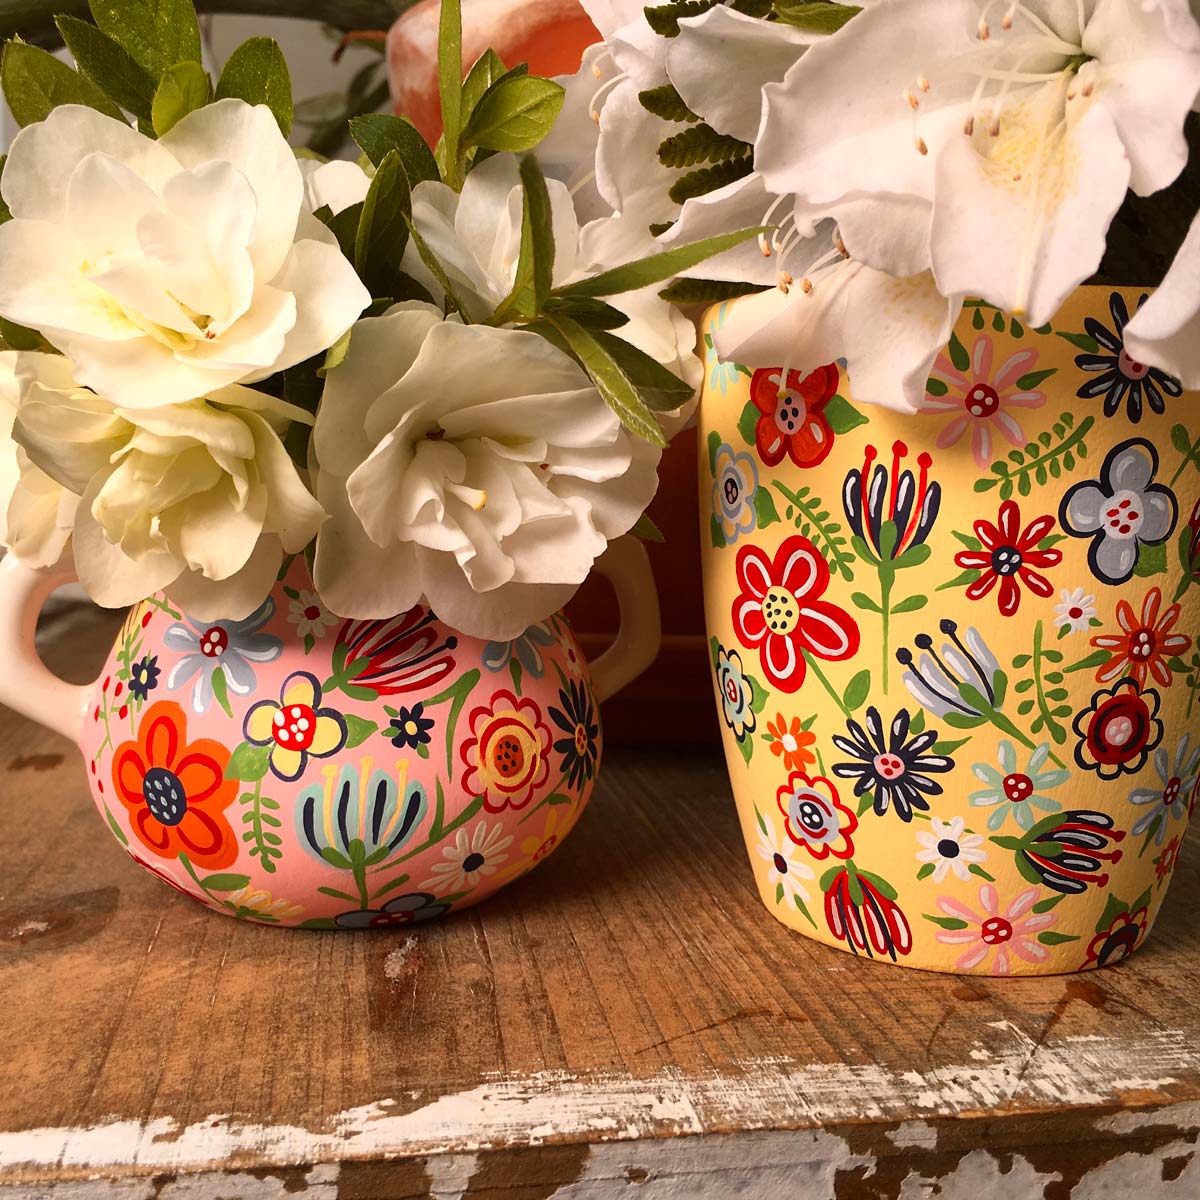 DIY Mother's Day Vases